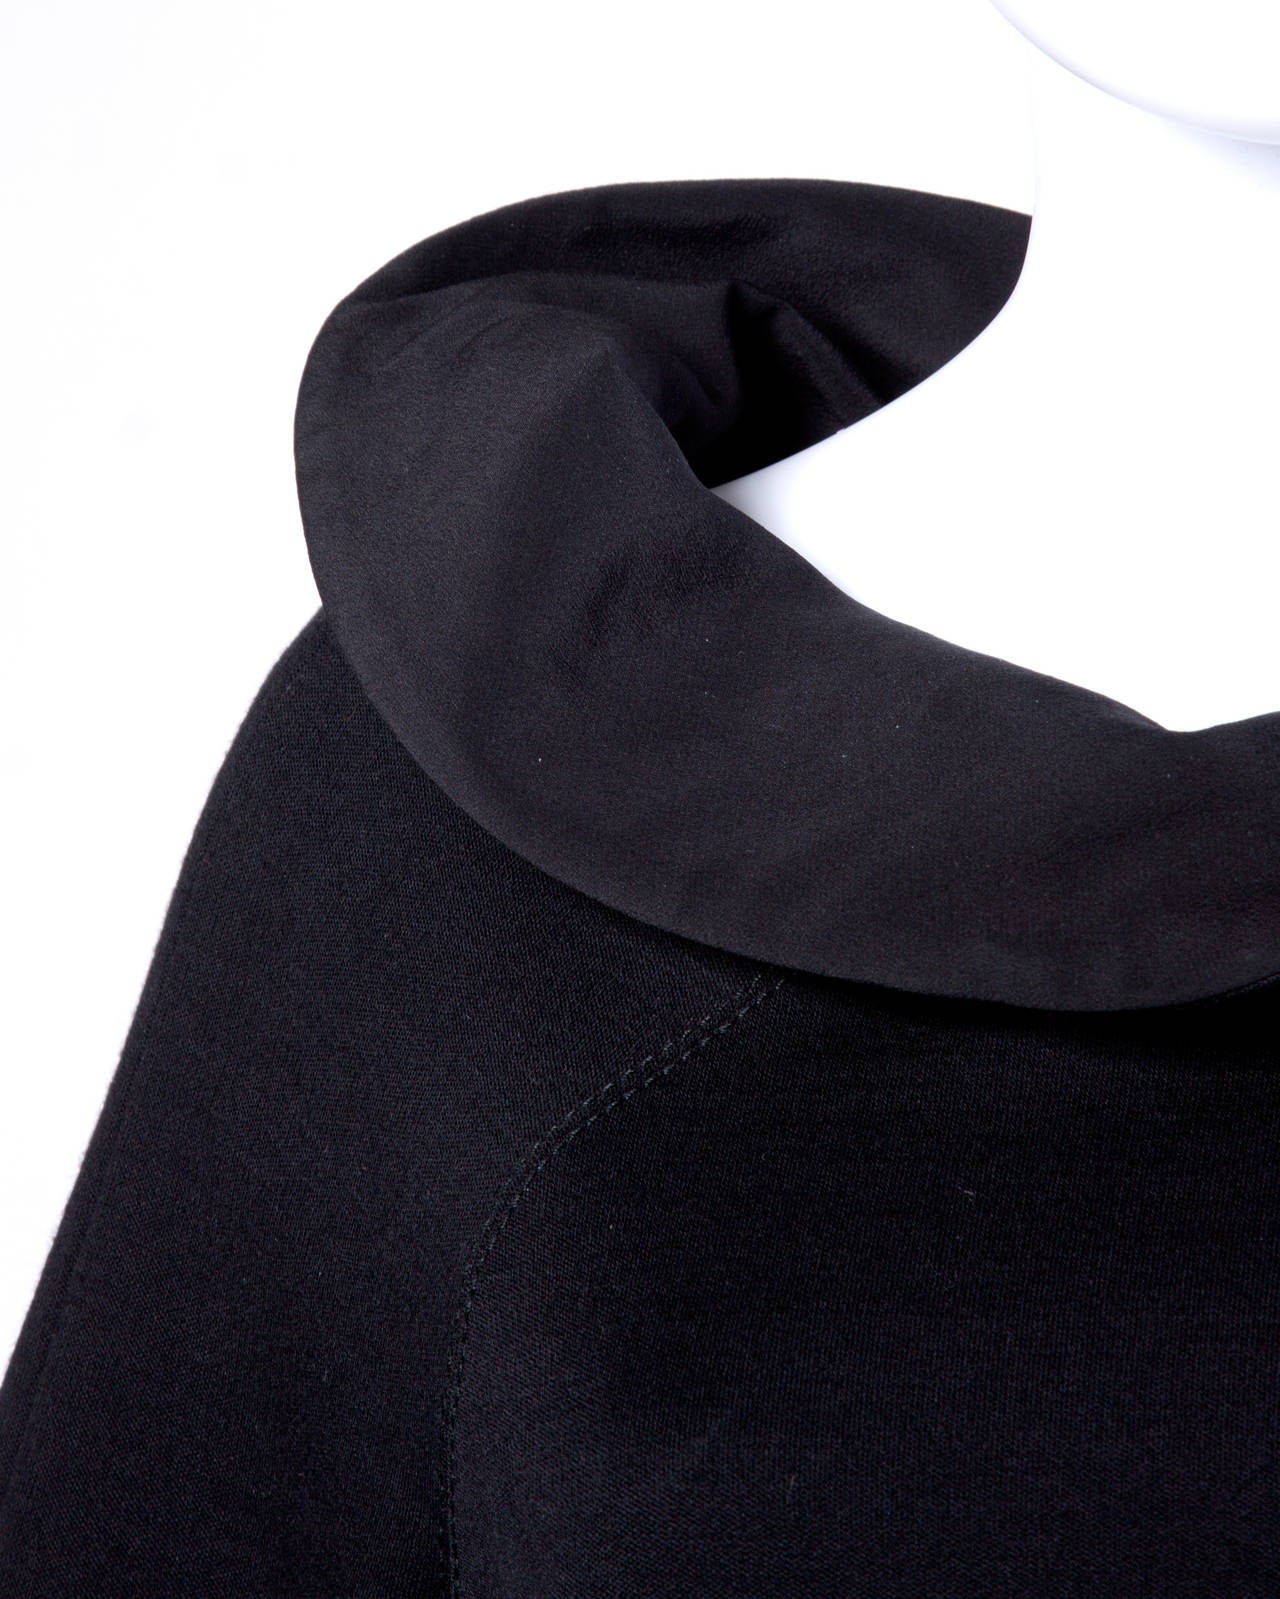 Black wool and silk avant garde tunic dress by Gianfranco Ferre. Unique avant garde shape with an asymmetric neckline and 